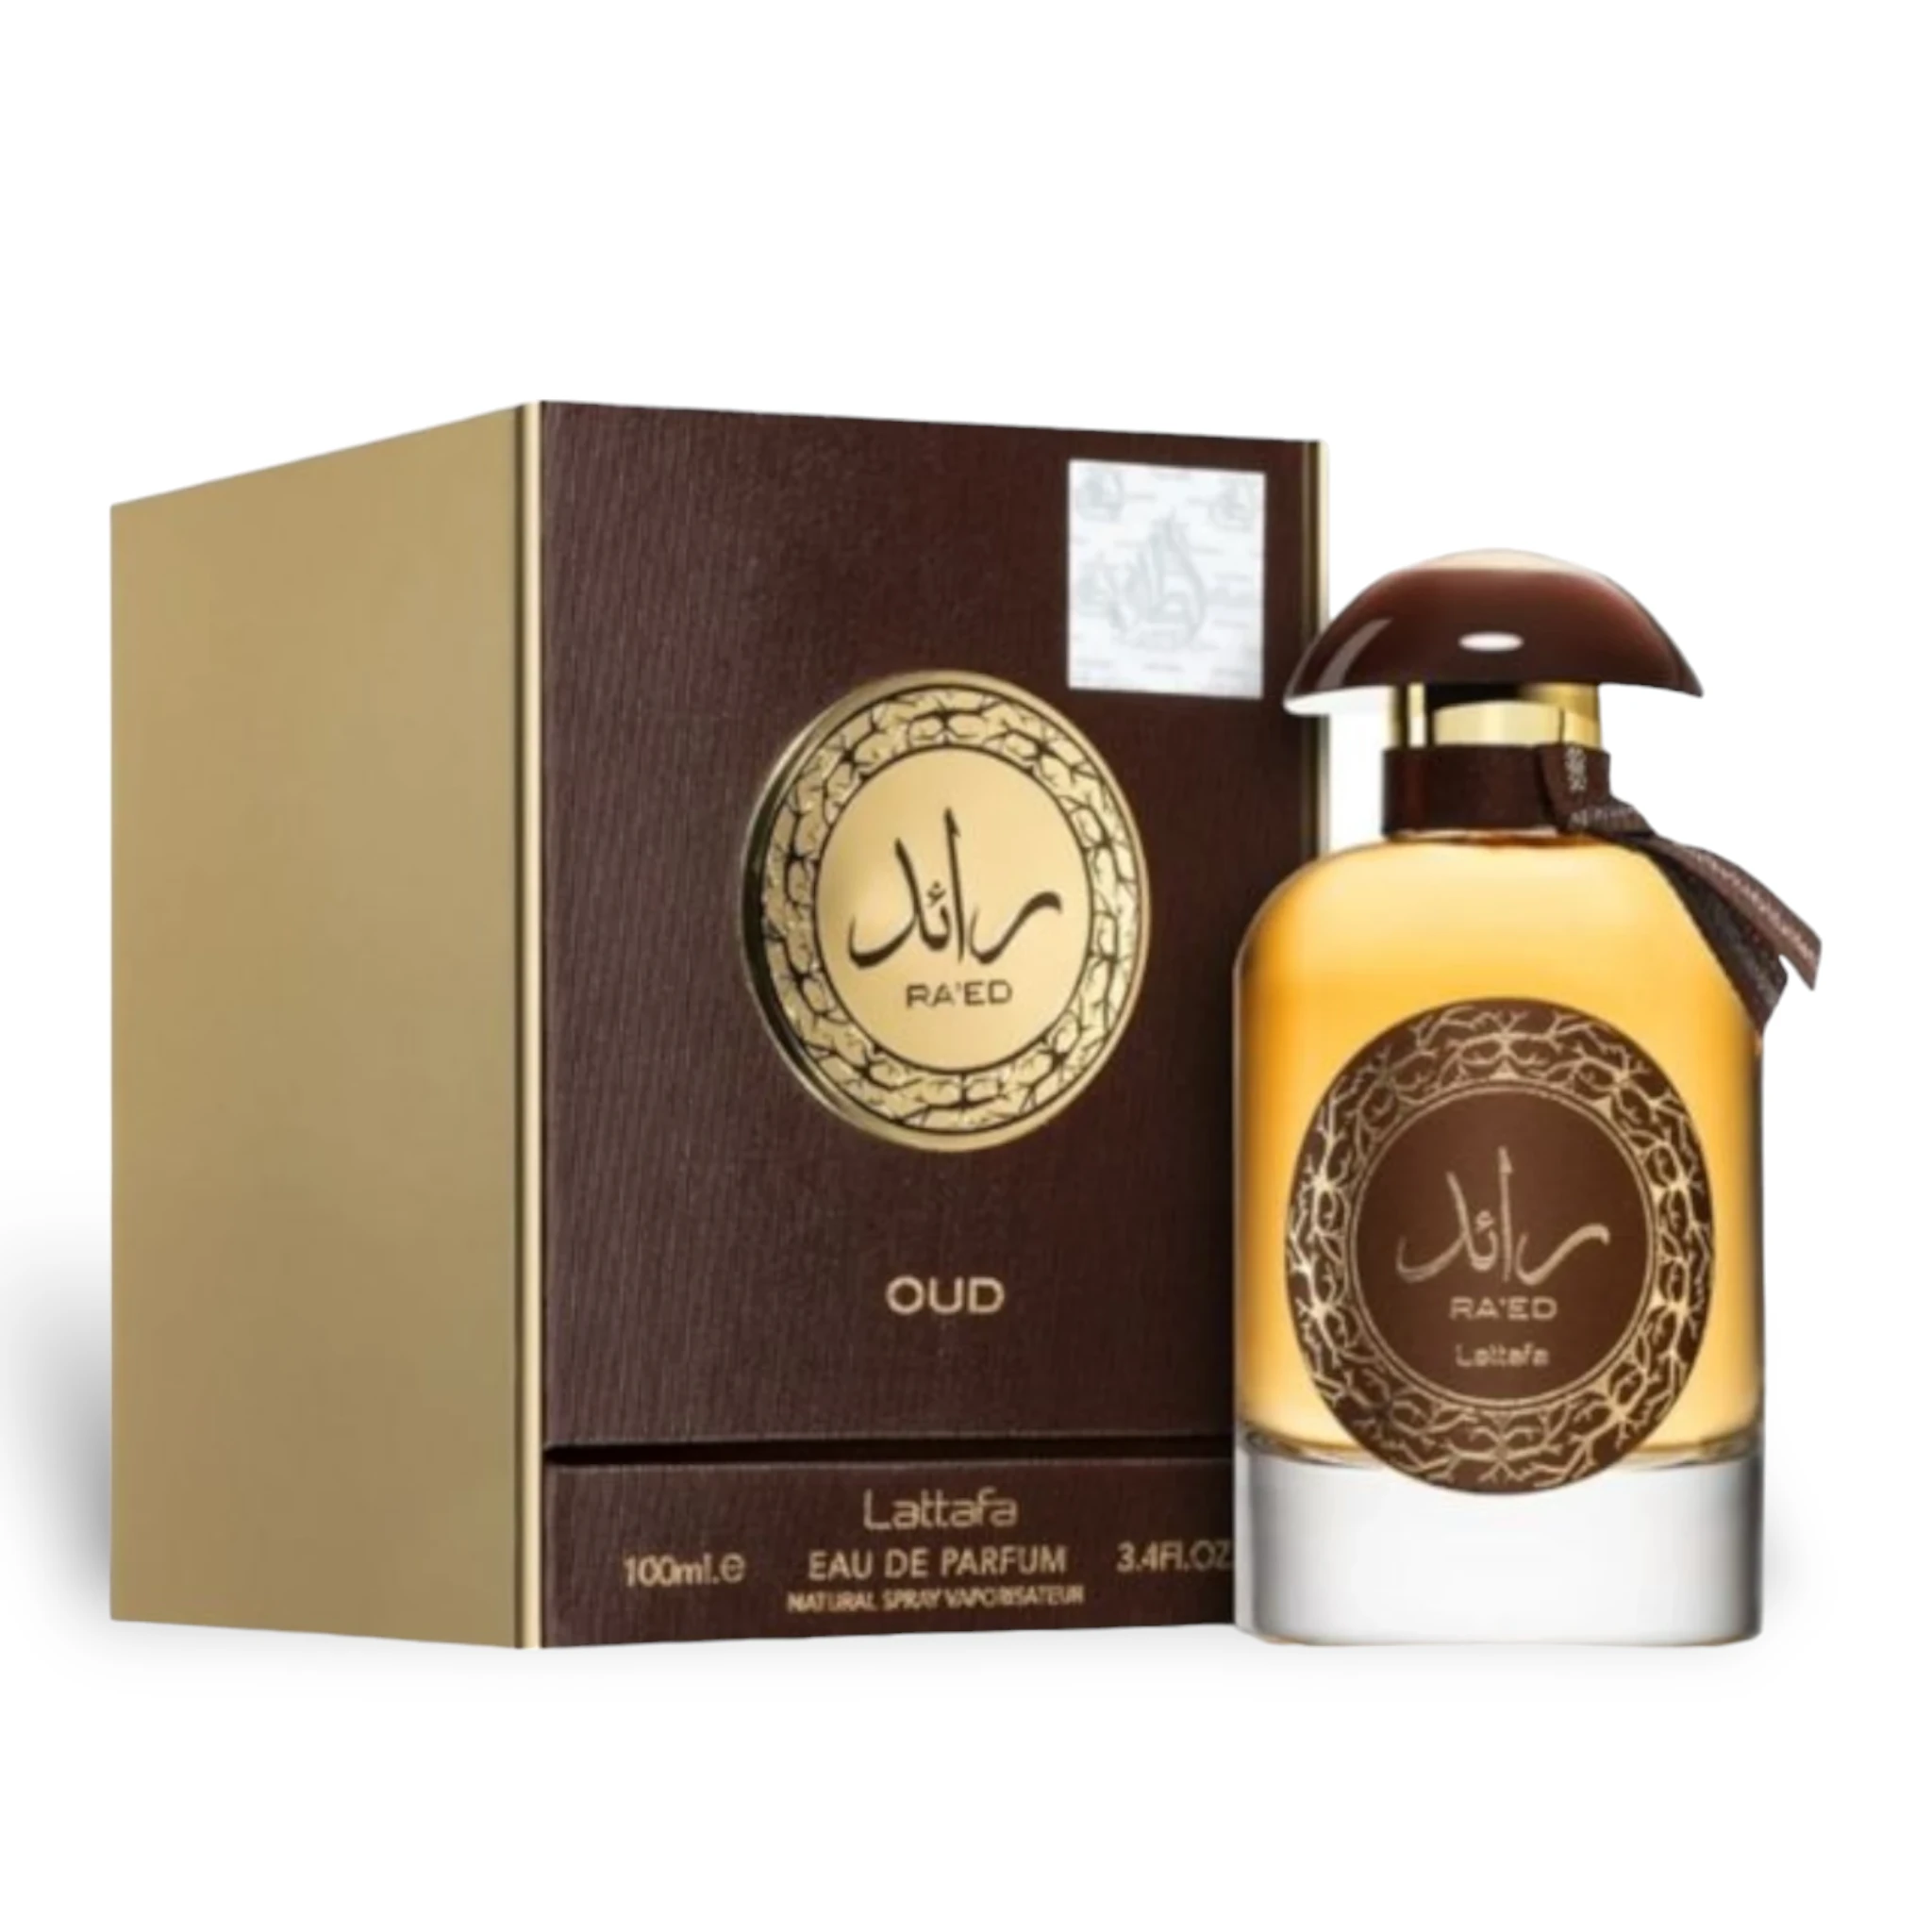 Raed Oud (Raed Oud) Perfume Eau De Perfume 100Ml By Lattafa